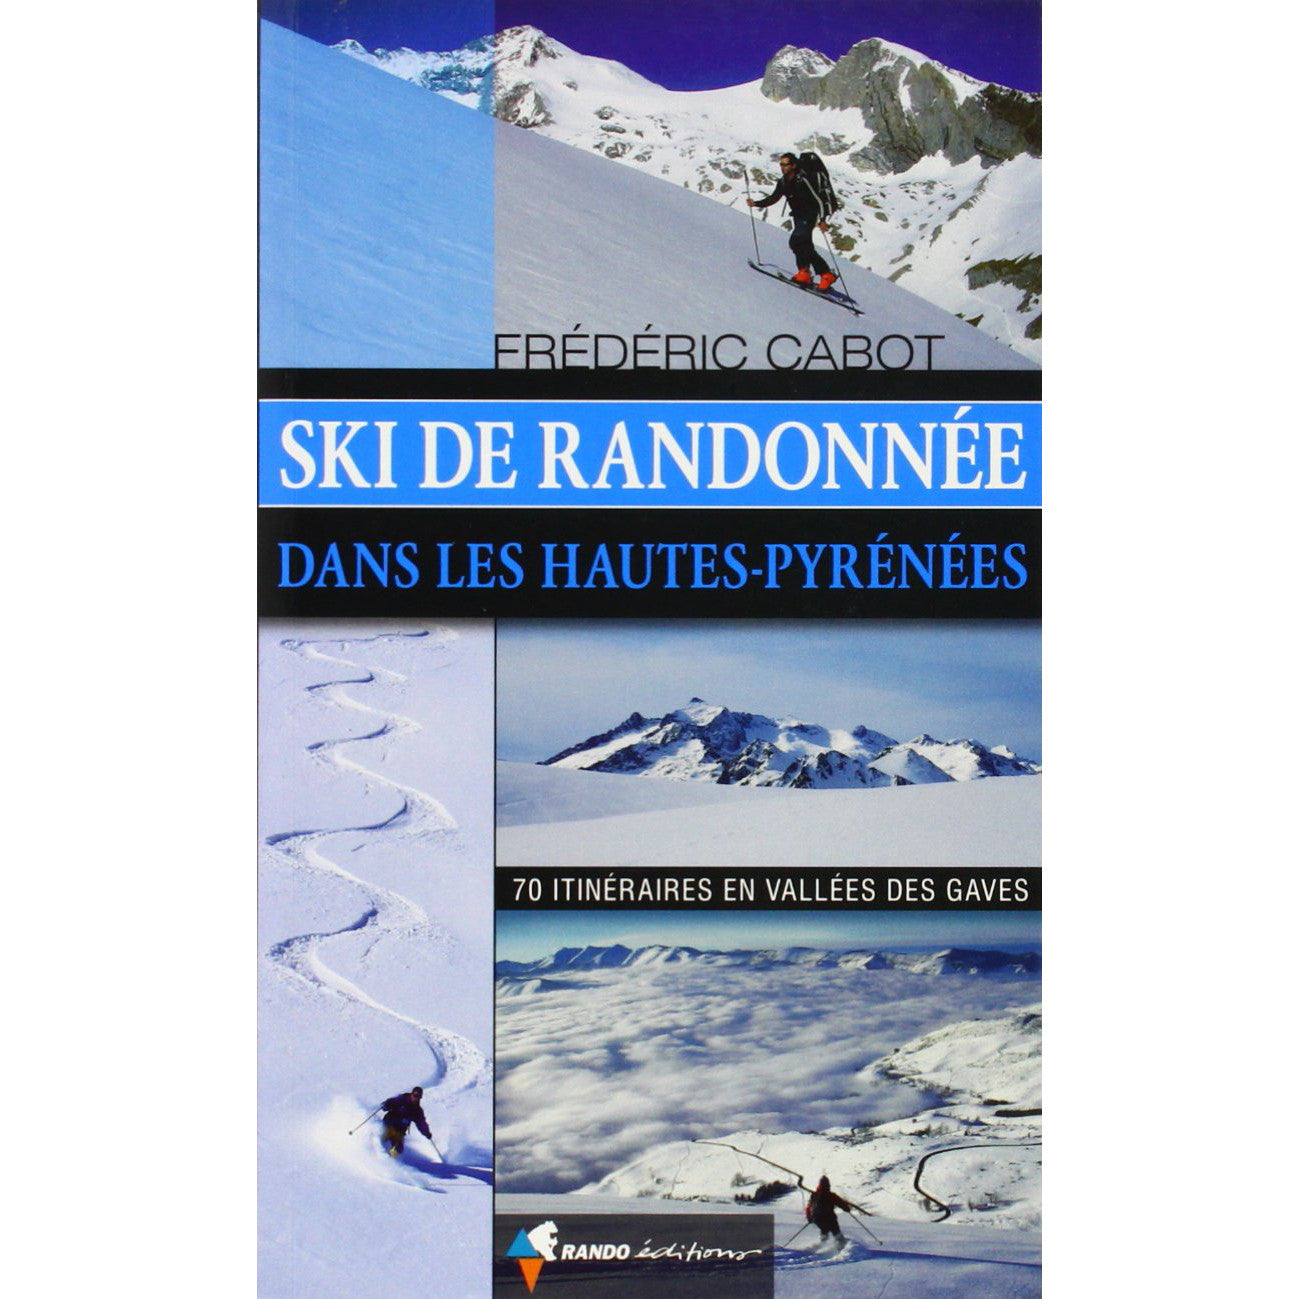 Ski de Randonee Dans Les Hautes Pyrenees | Frederic Cabot | Backcountry Books